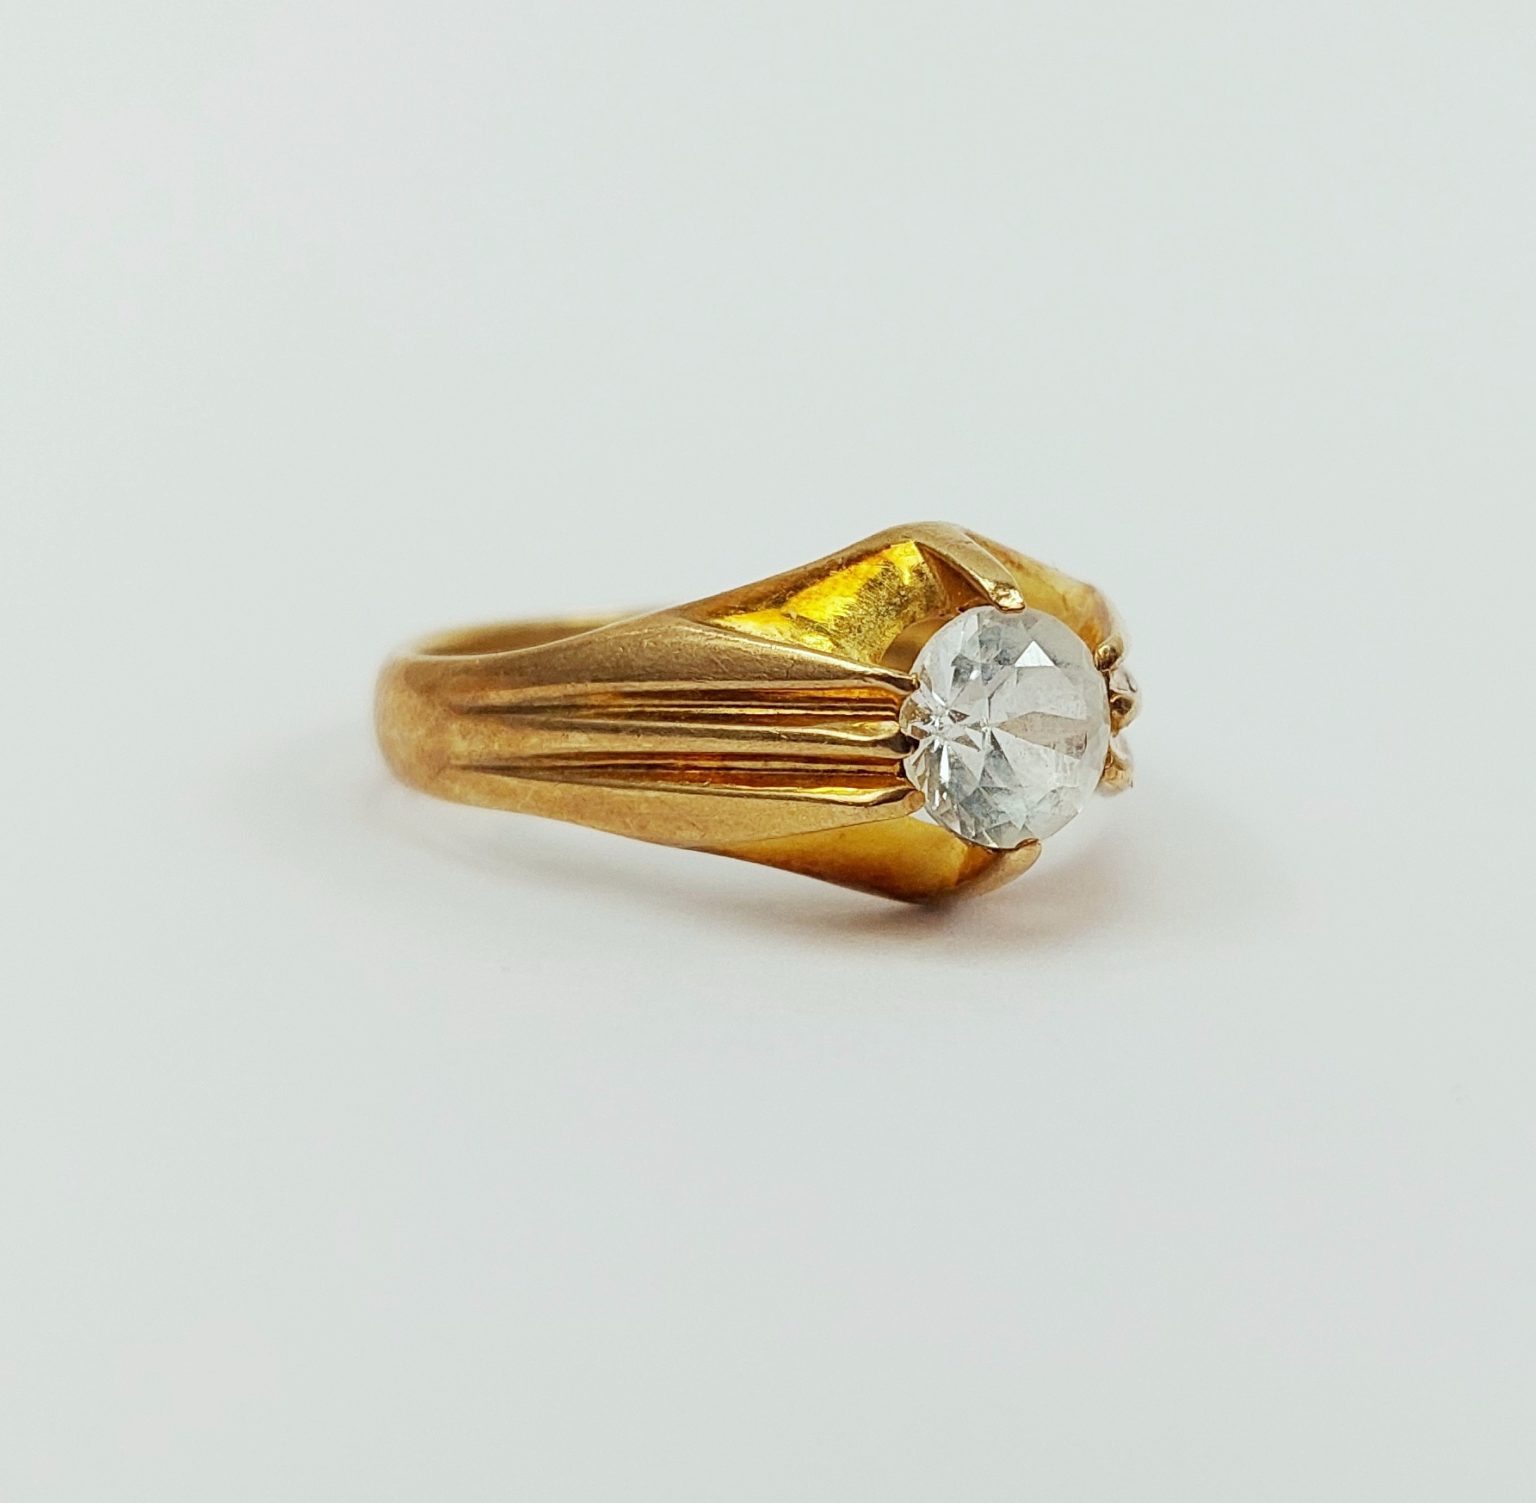 Gents 9ct Gold Quartz Ring UK Size P+, US 7.75 - Sally Antiques